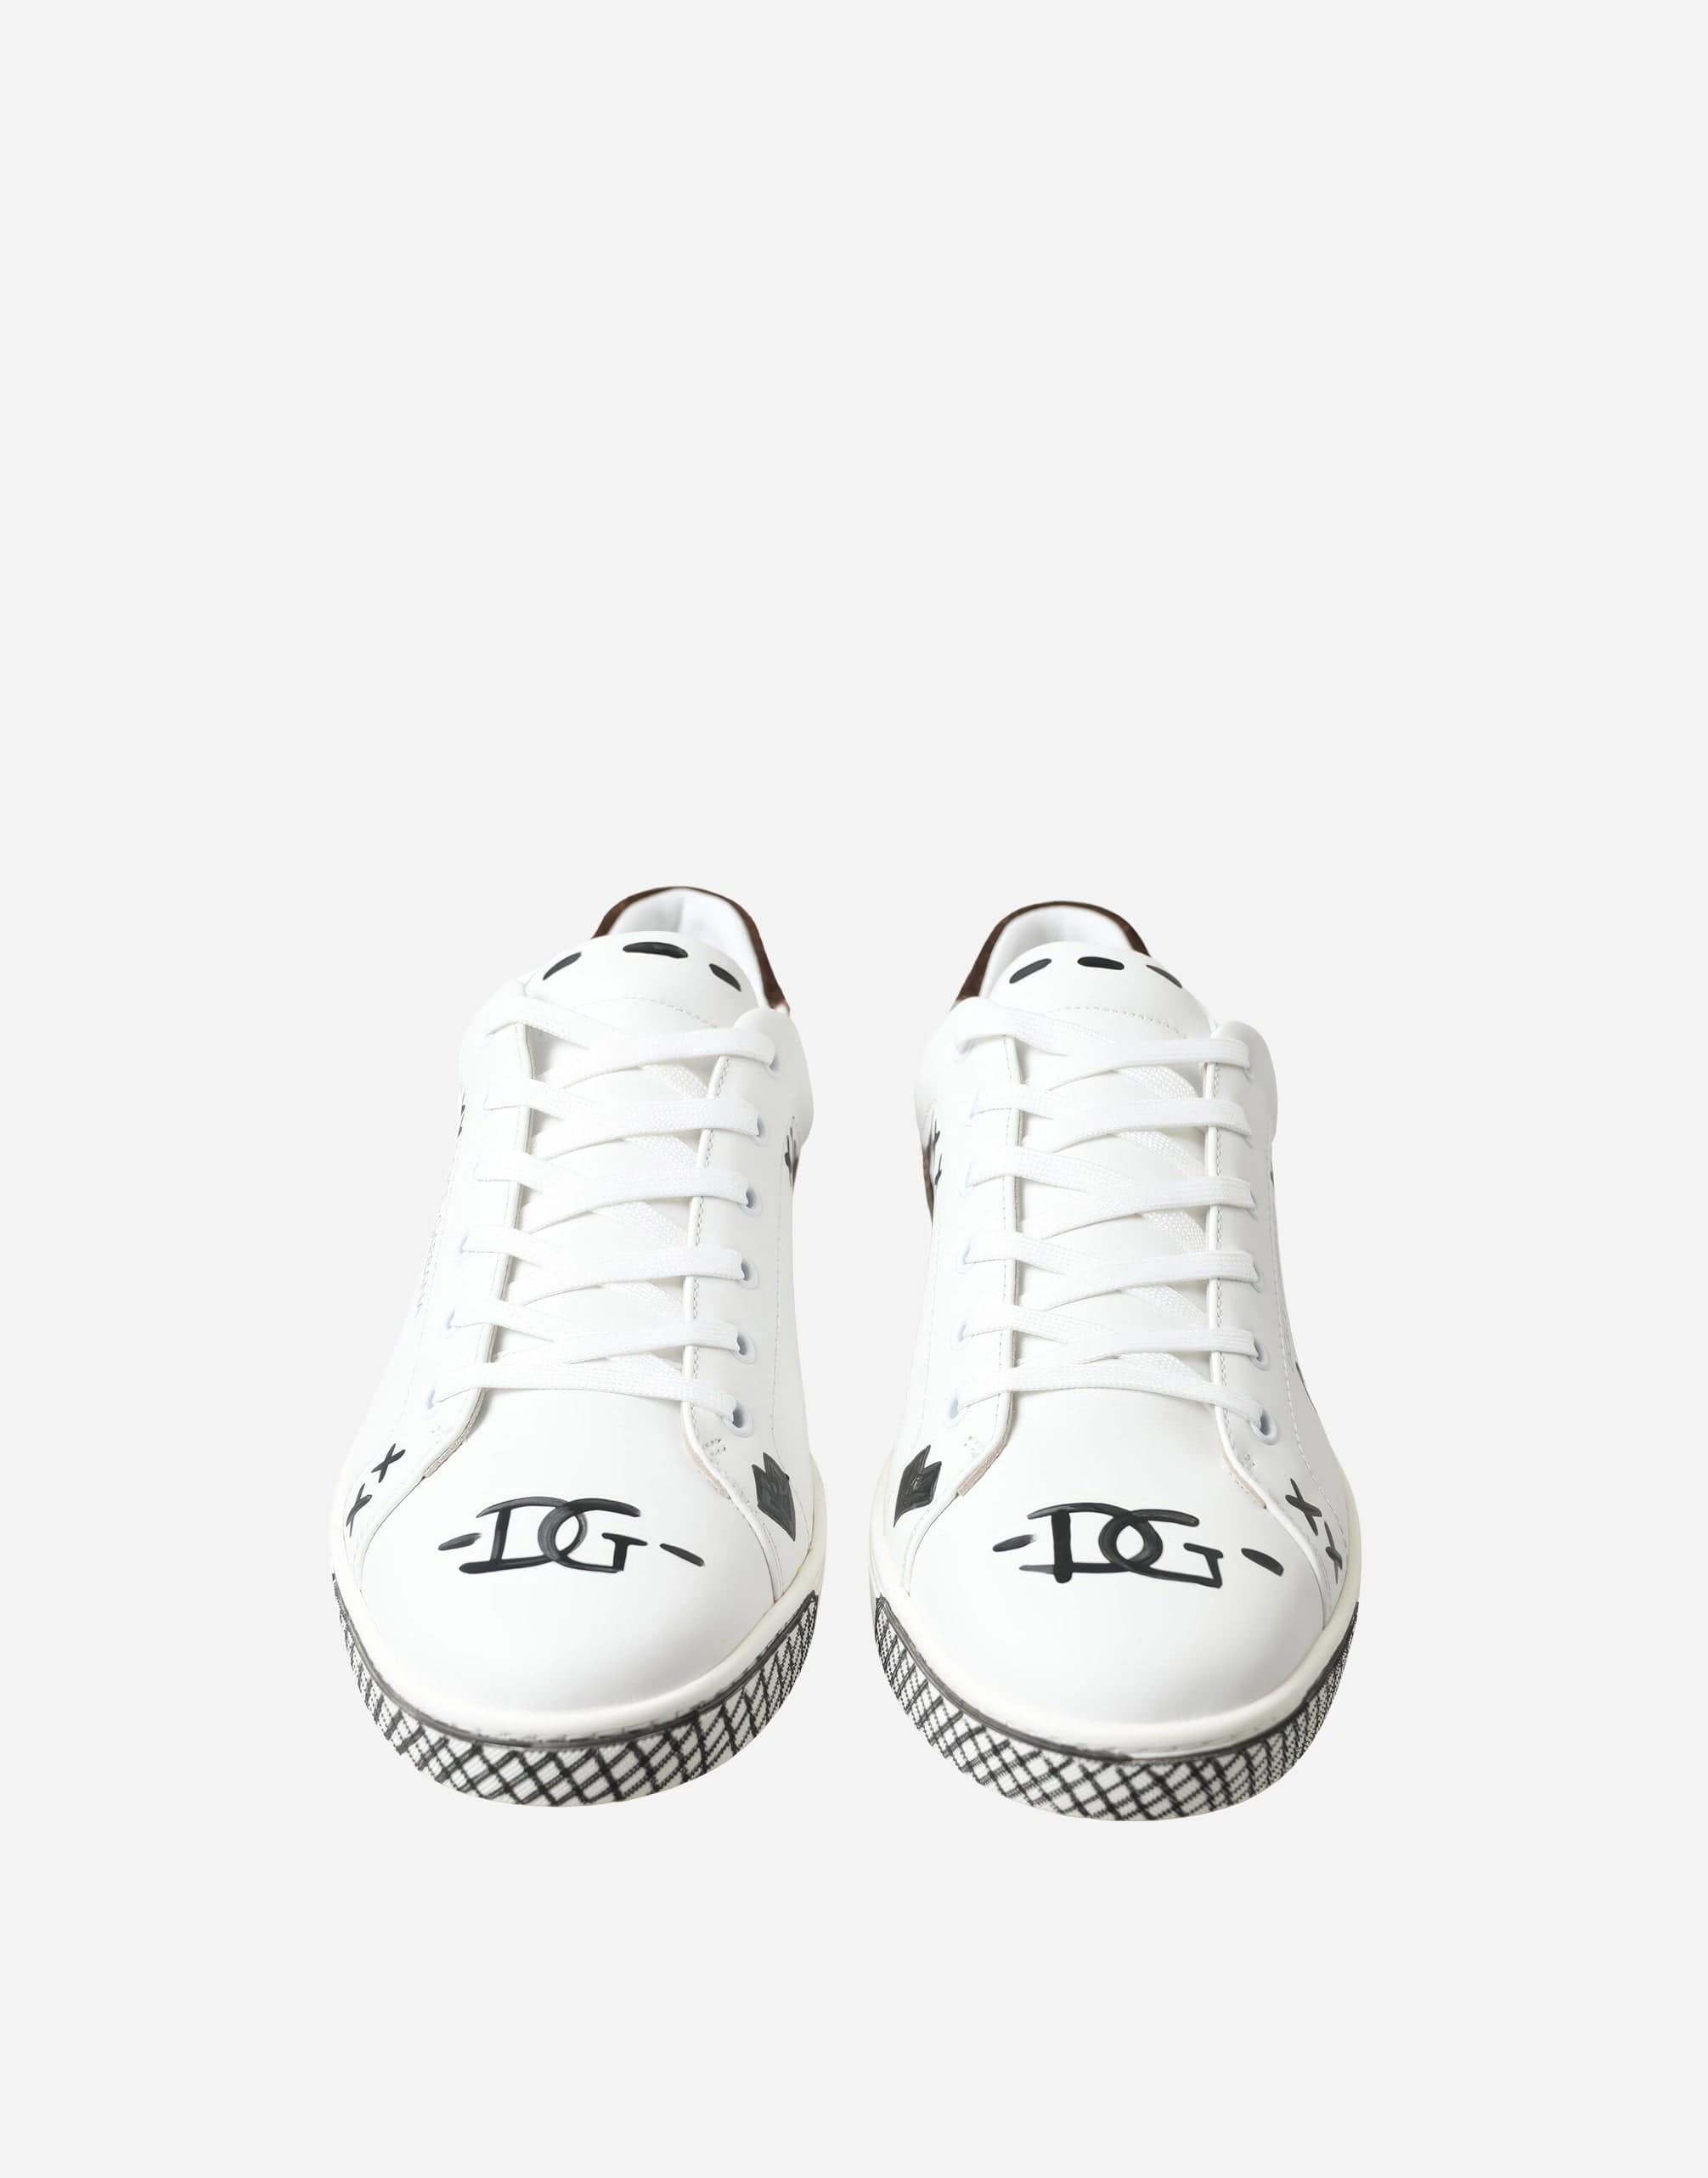 Dolce & Gabbana Custom Hand-Painted Sneakers